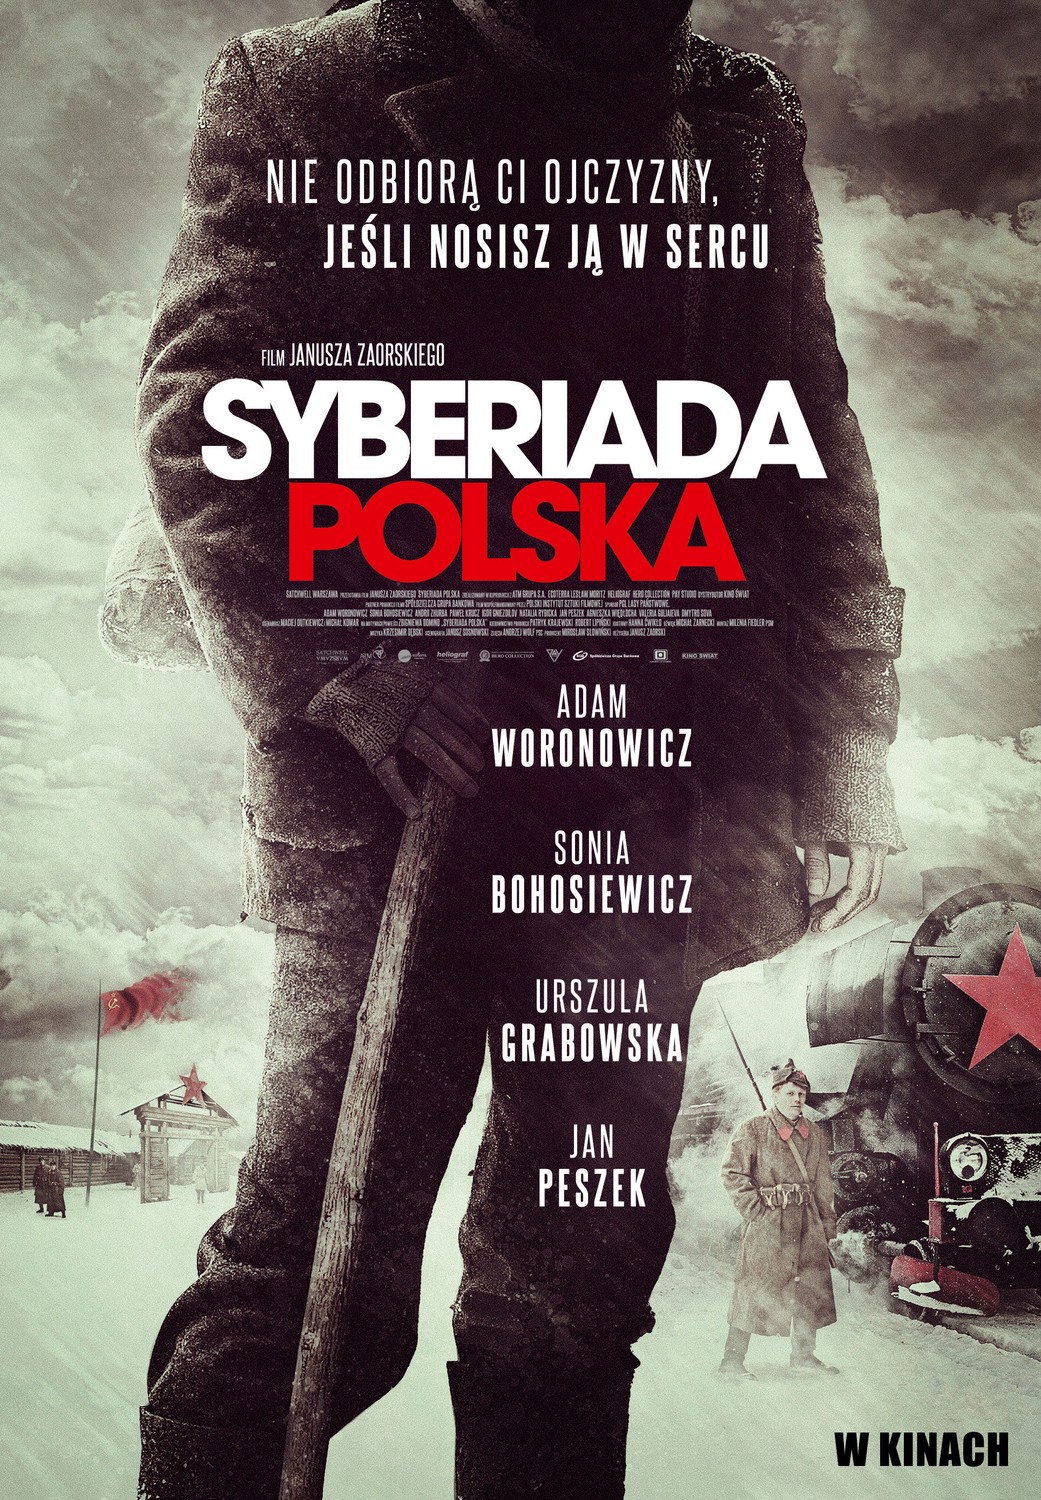 Extra Large Movie Poster Image for Syberiada polska 